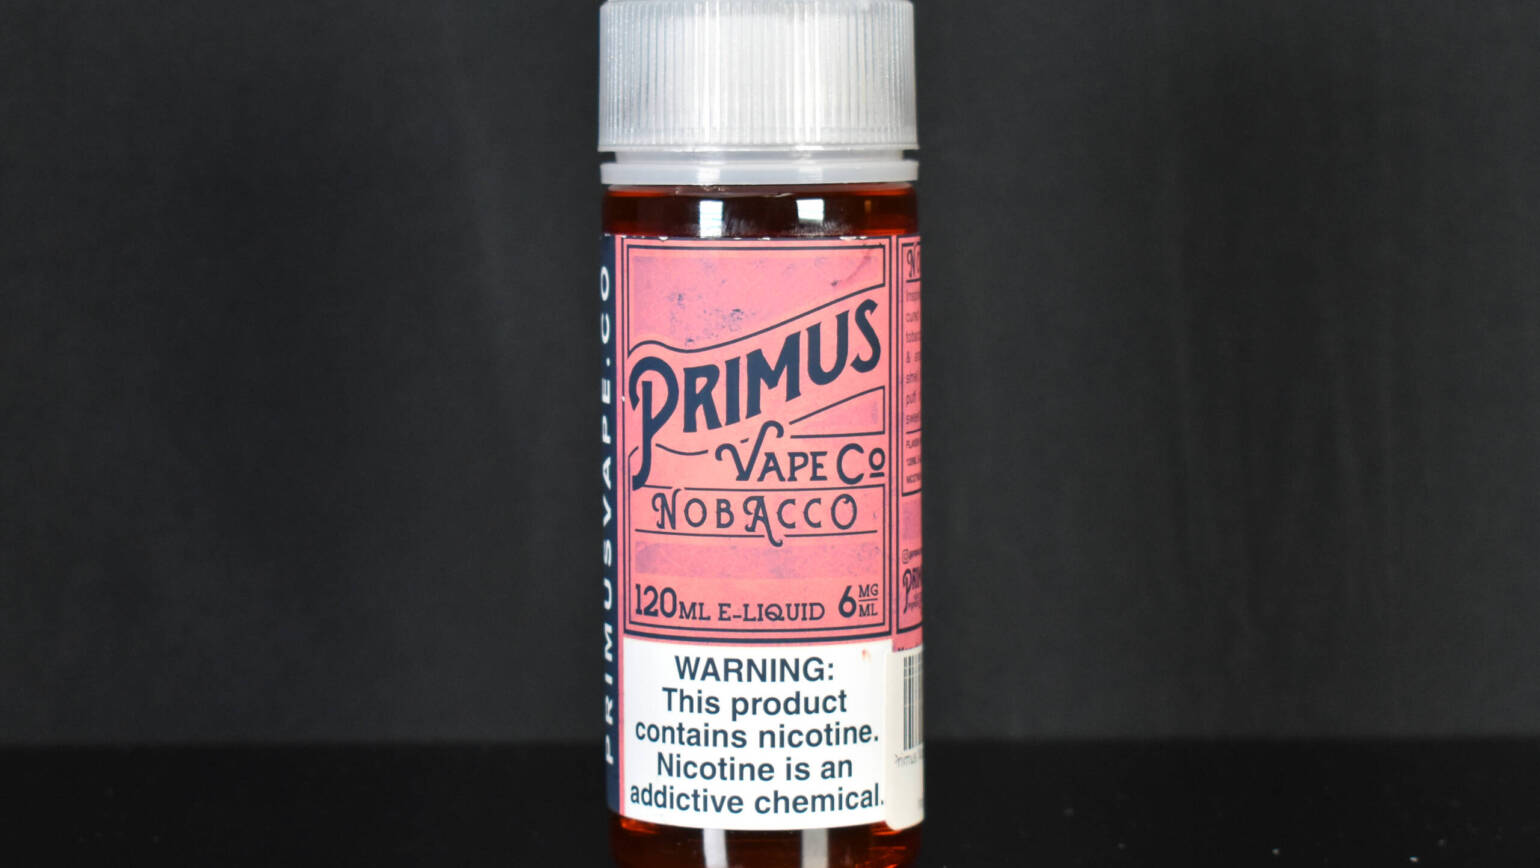 Primus Vape Co – Nobacco